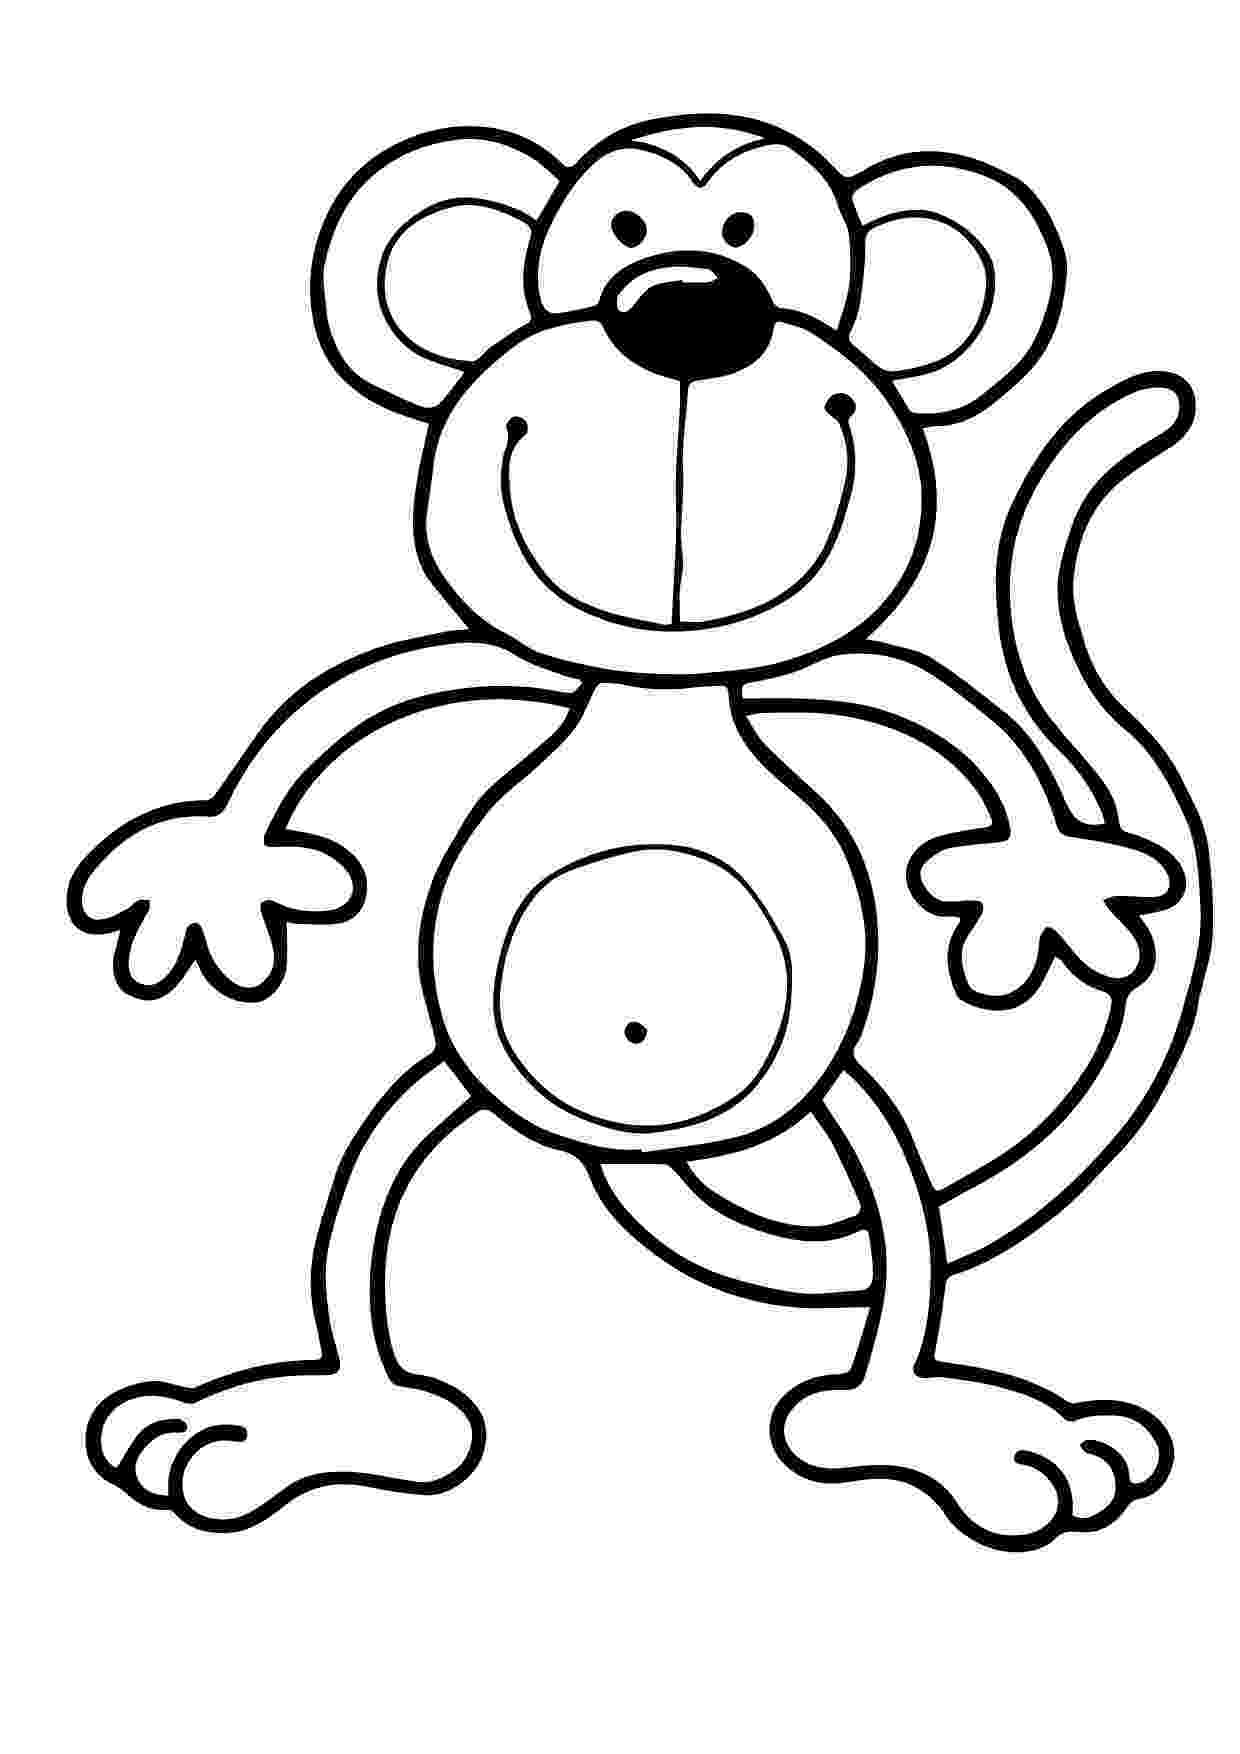 monkey coloring images free printable monkey coloring pages for kids cool2bkids monkey coloring images 1 1